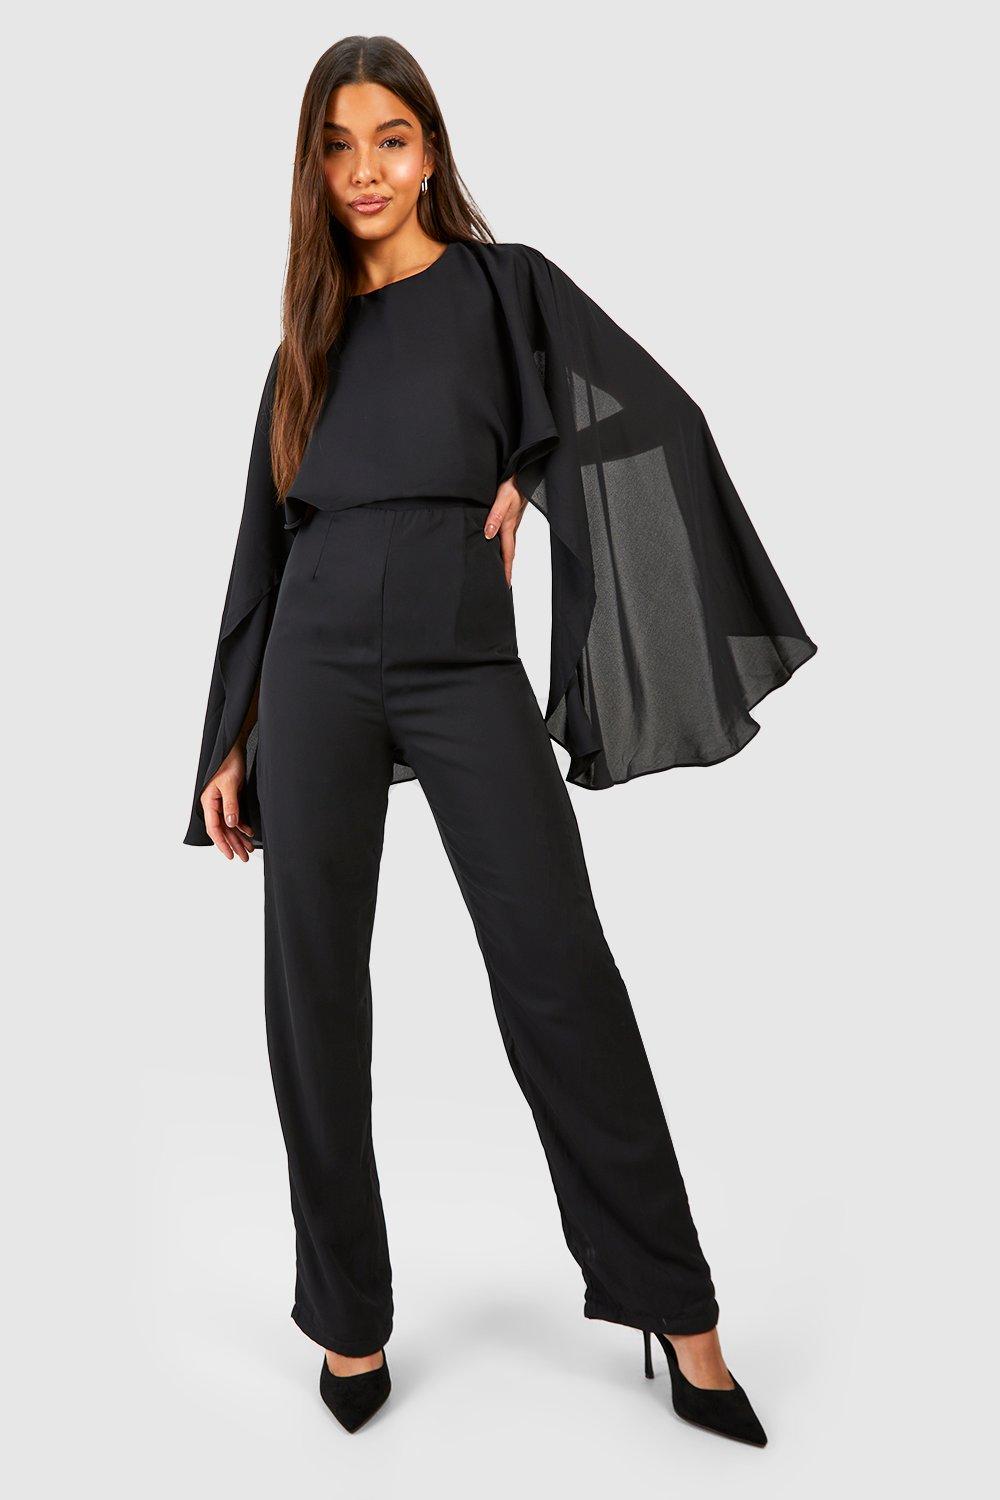 Crepe, satin and chiffon jumpsuit, black | MAX&Co.